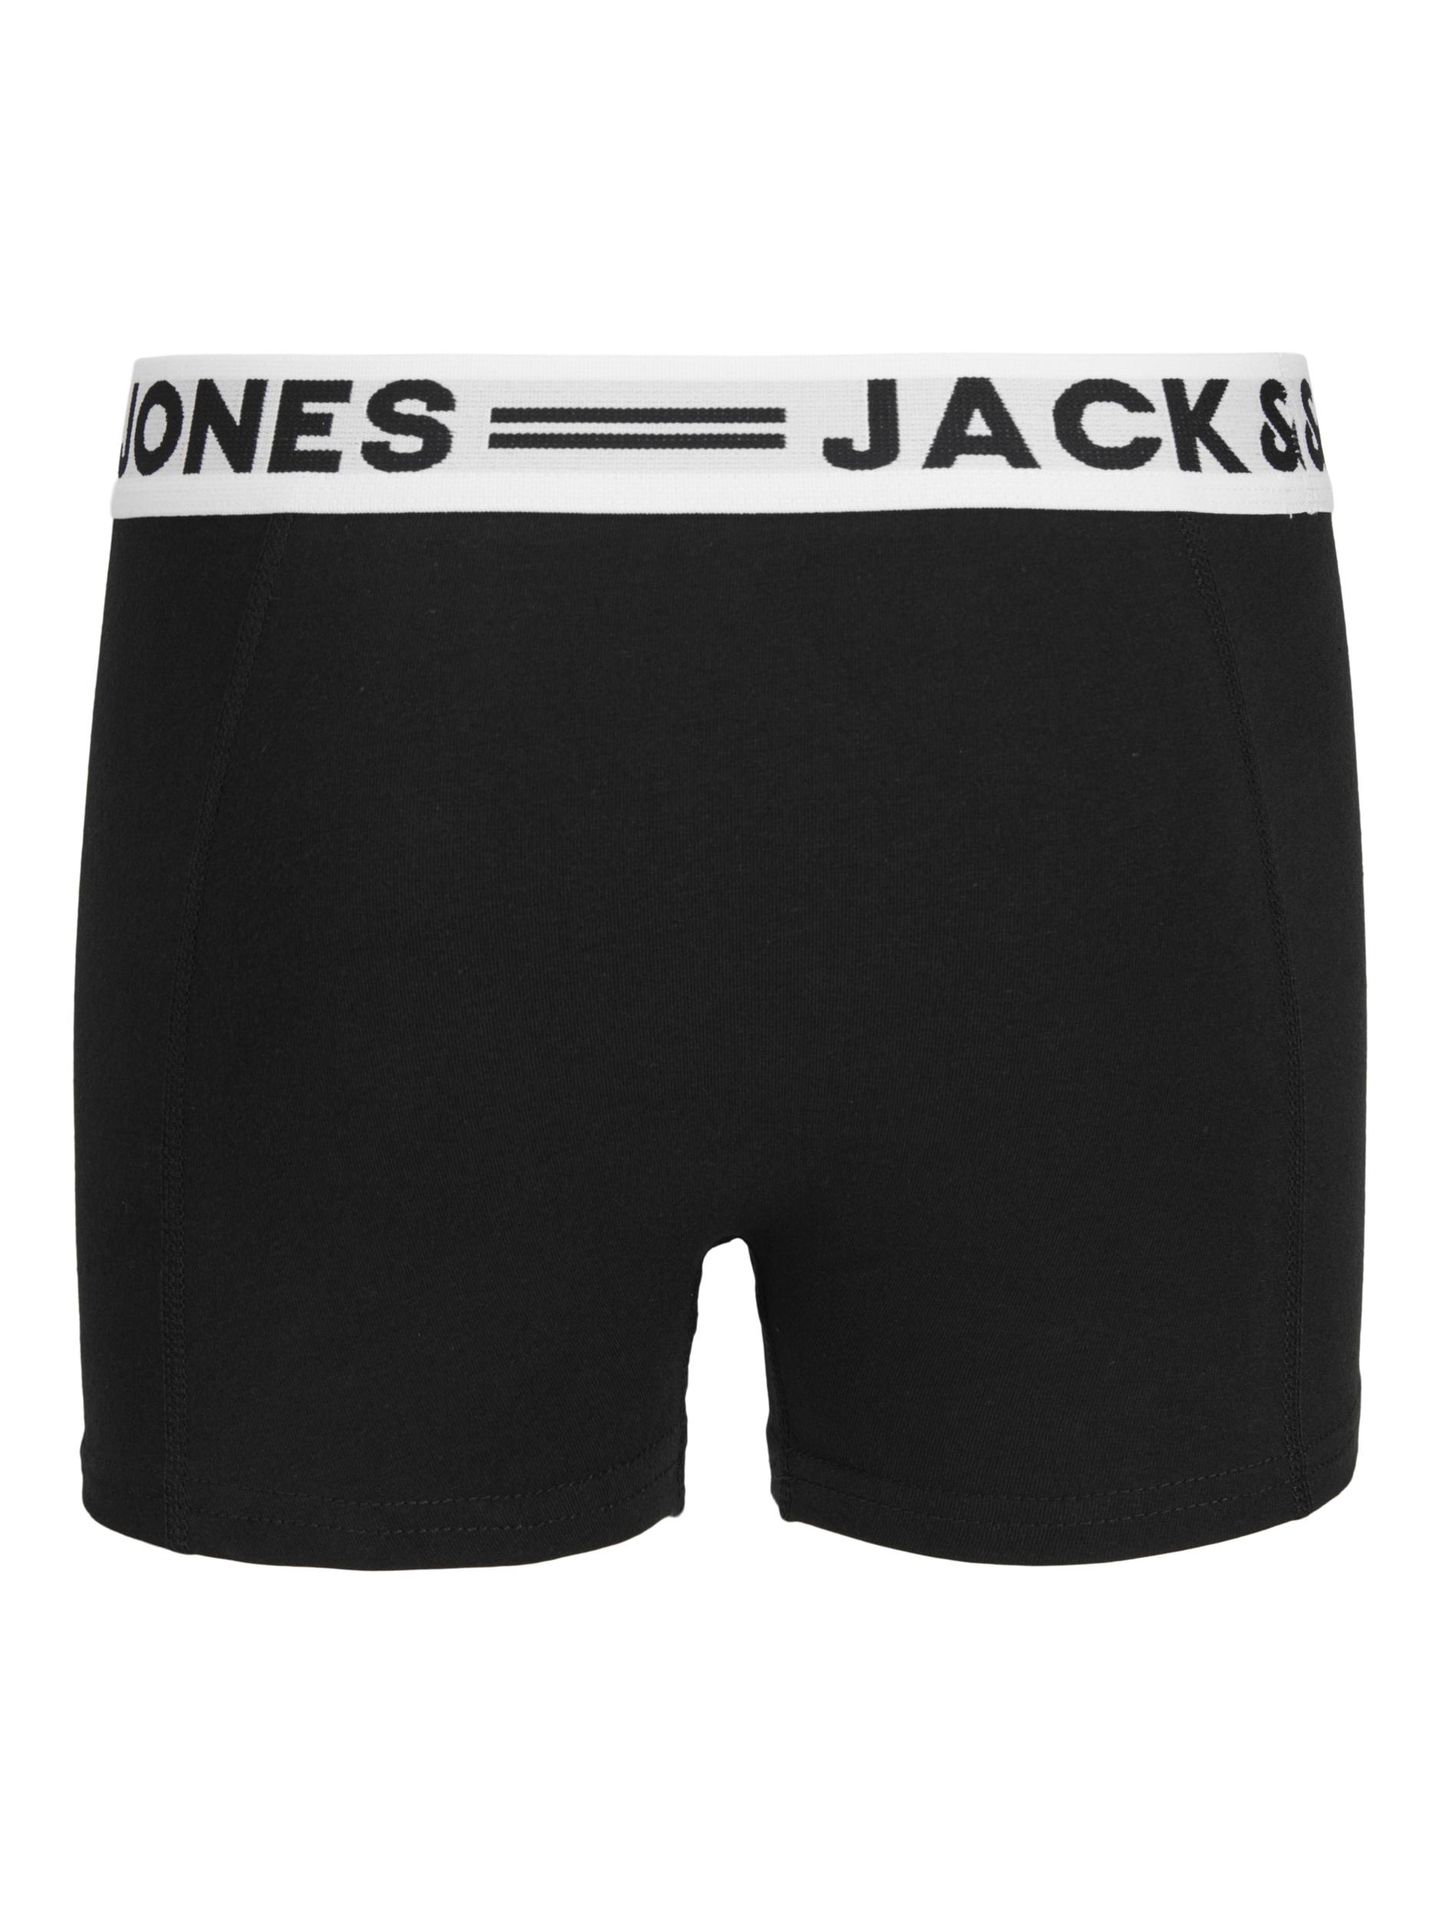 Jack & Jones SENSE TRUNKS 3-PACK NOOS JNR - Black/Black & Black Black/SLIM FIT 00095275-EKA26011400000260